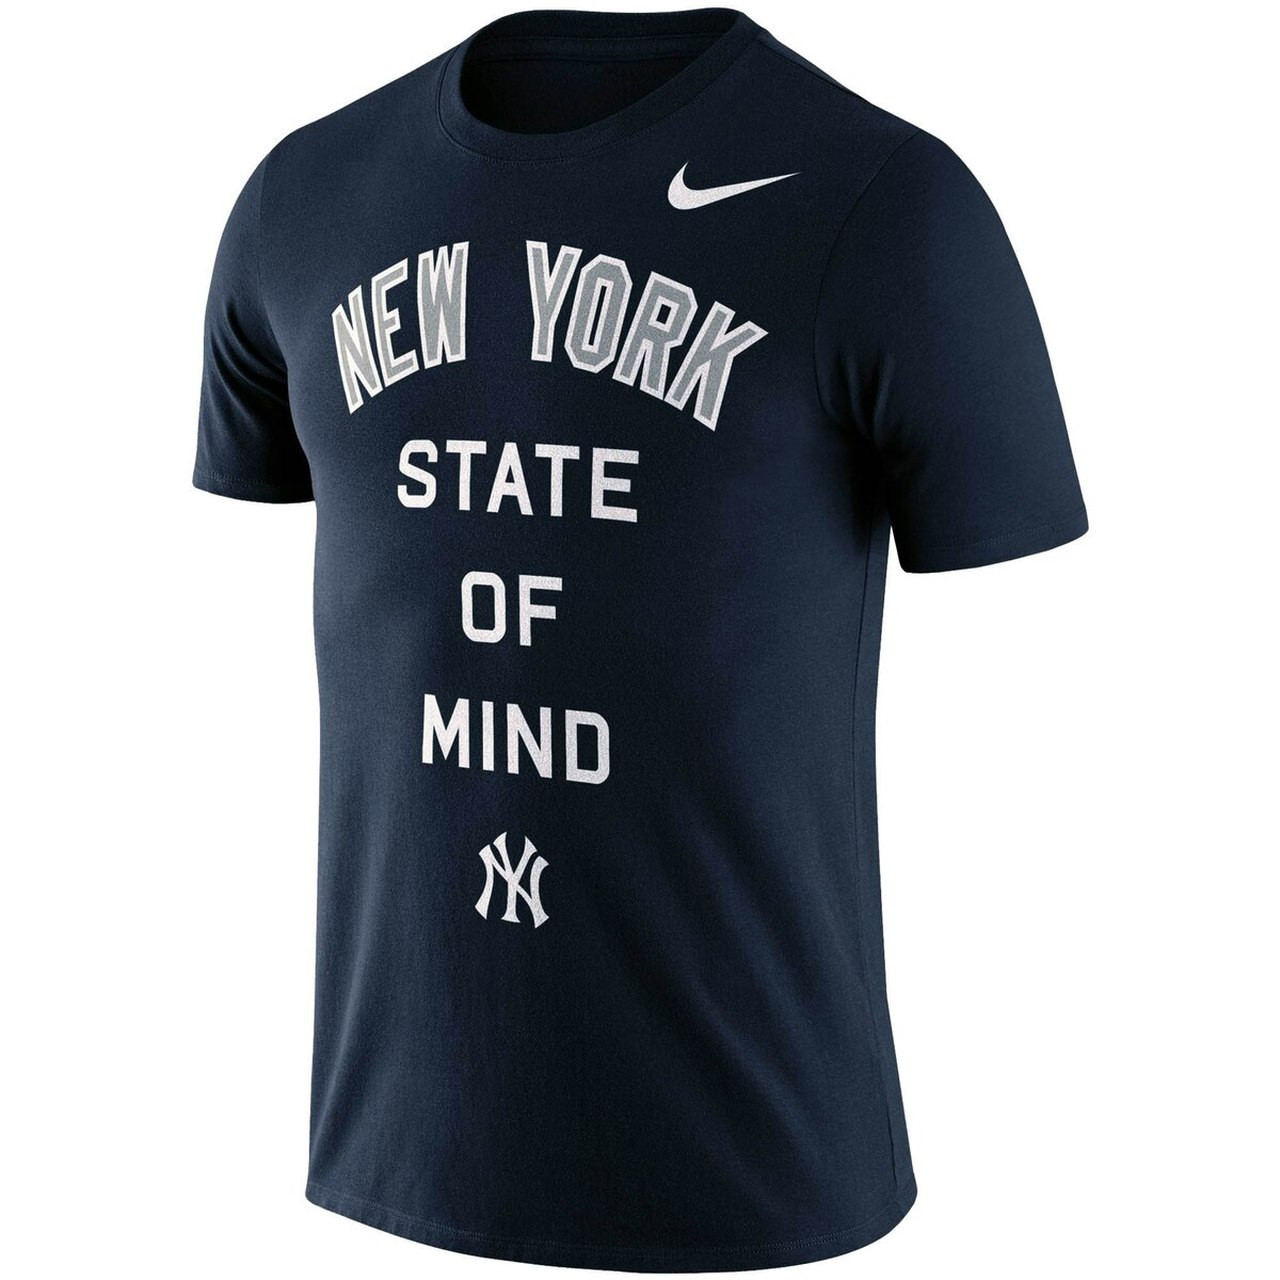 Everson Pereira Men's Nike Gray New York Yankees Road Authentic Custom Jersey